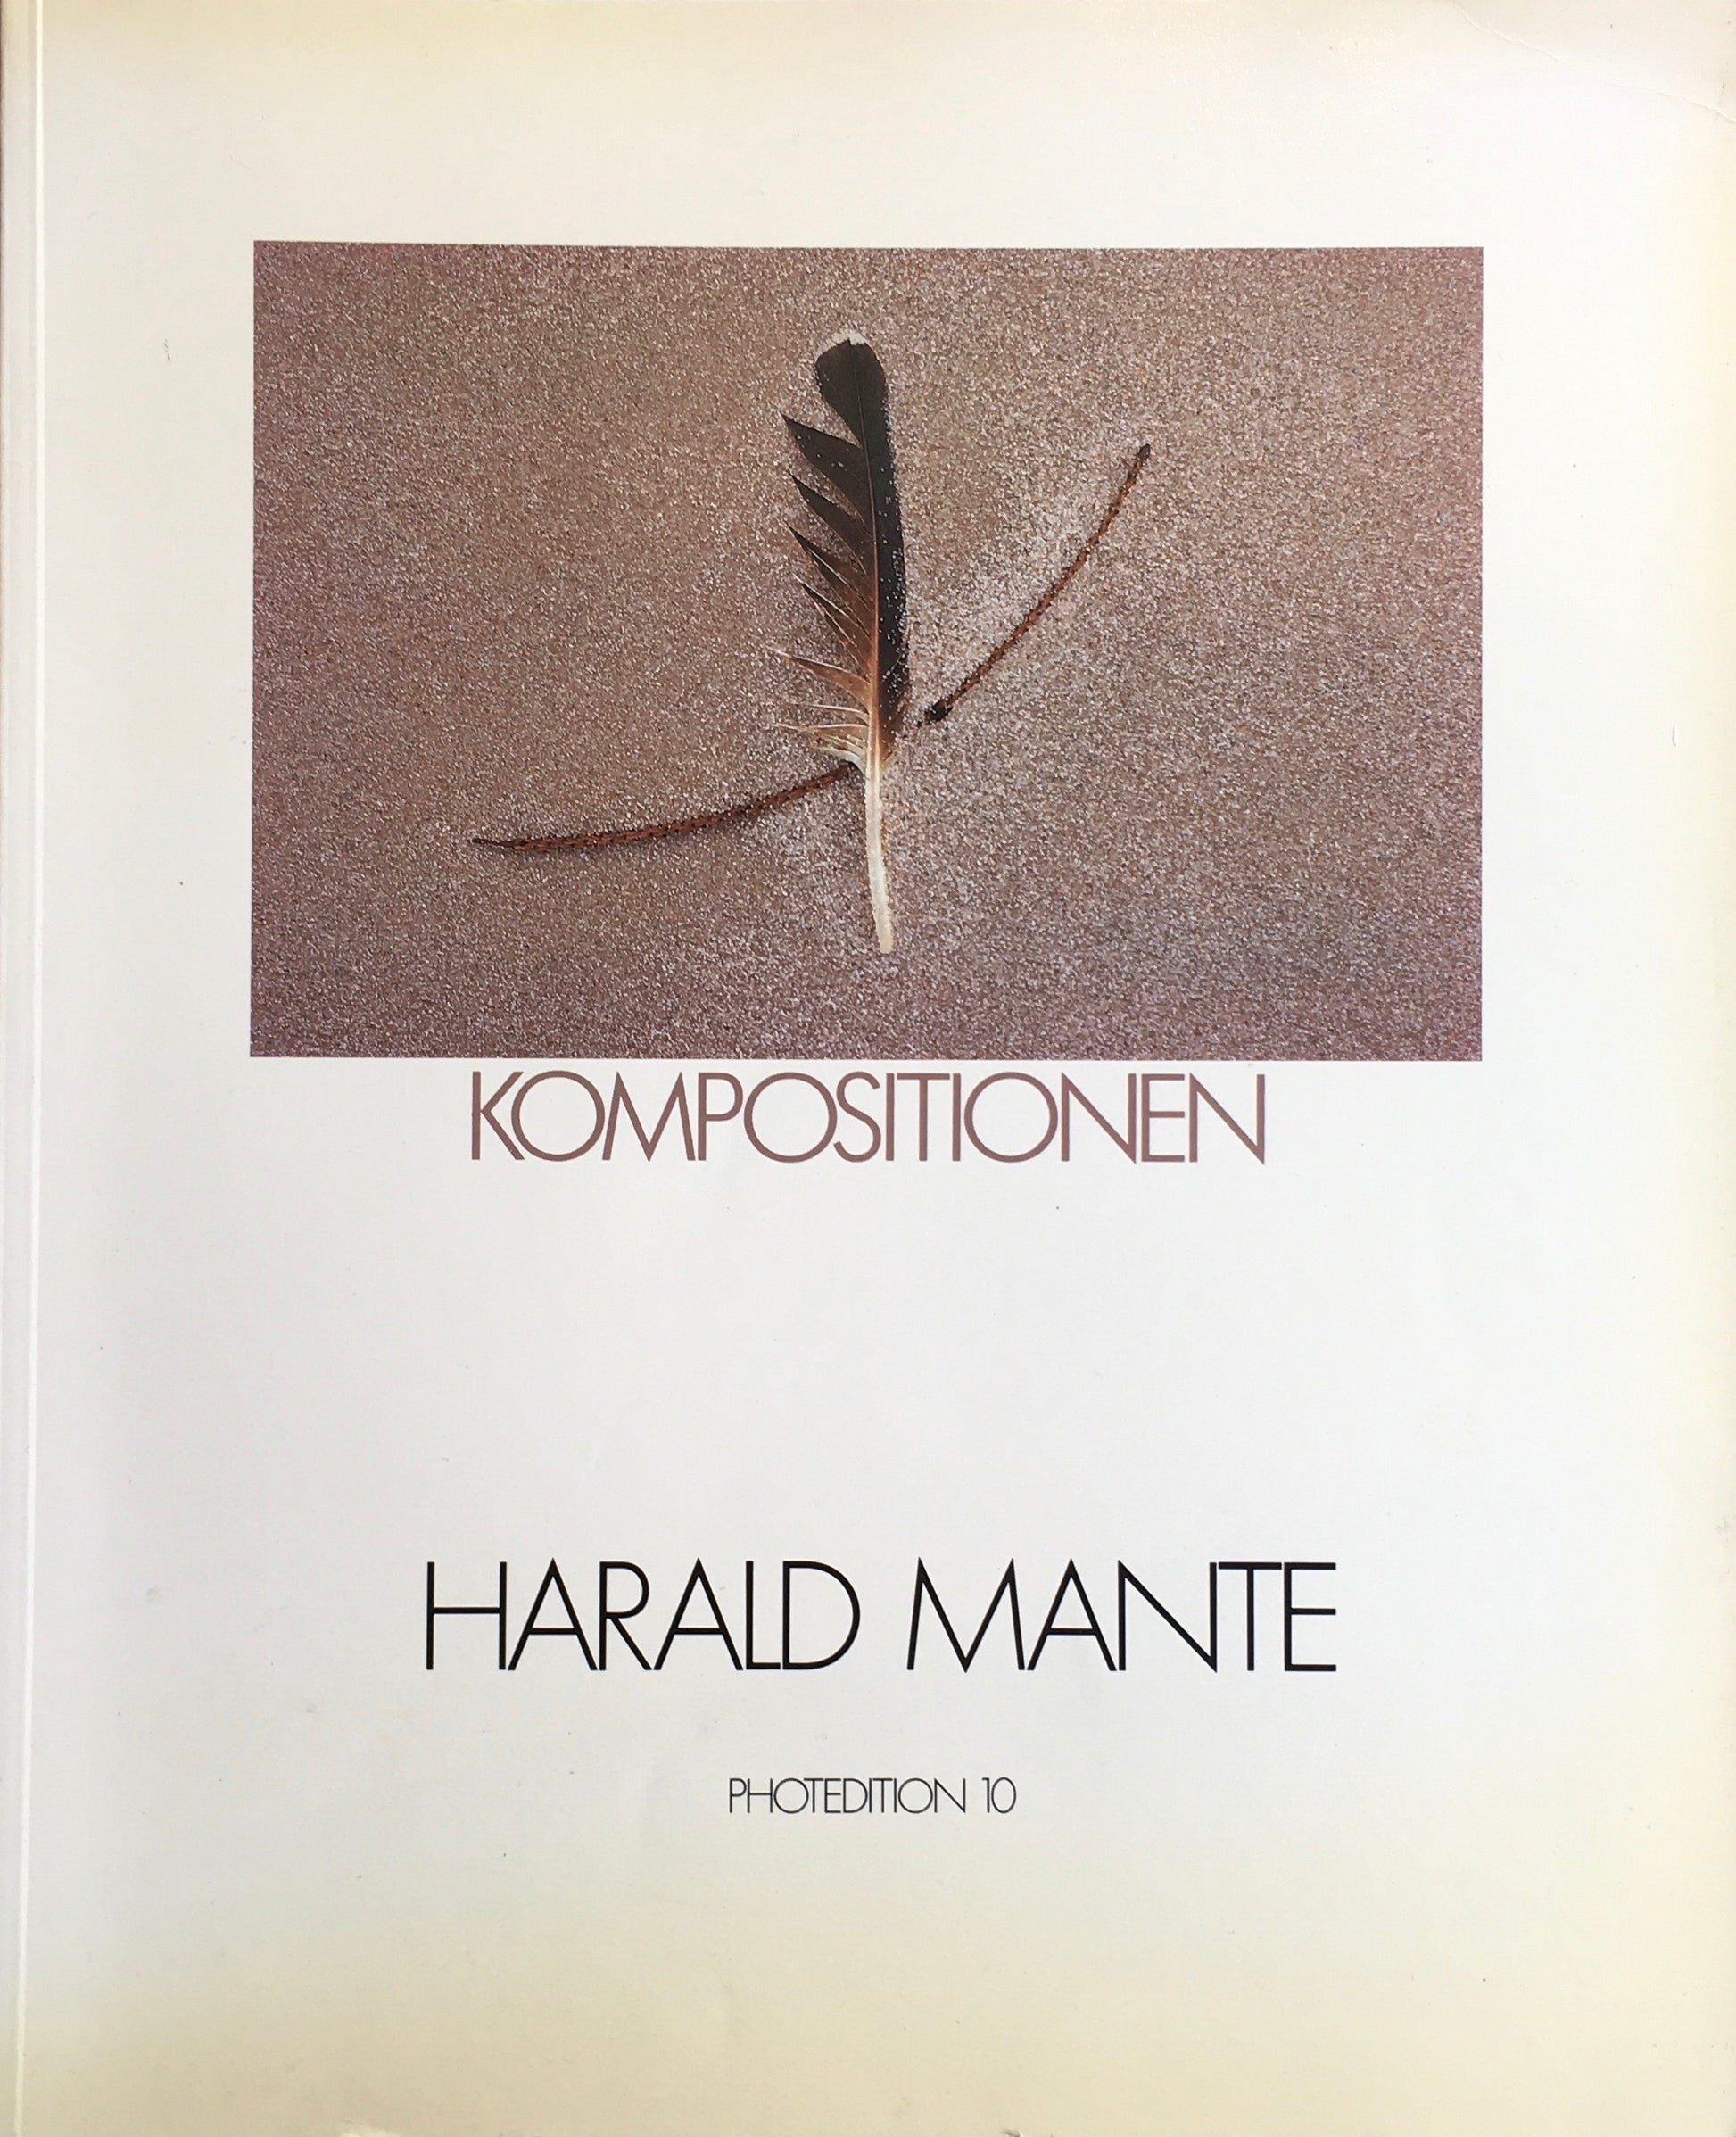 Kompositionen　Harald Mante　Photedition 9　ハラルド・マンテ写真集